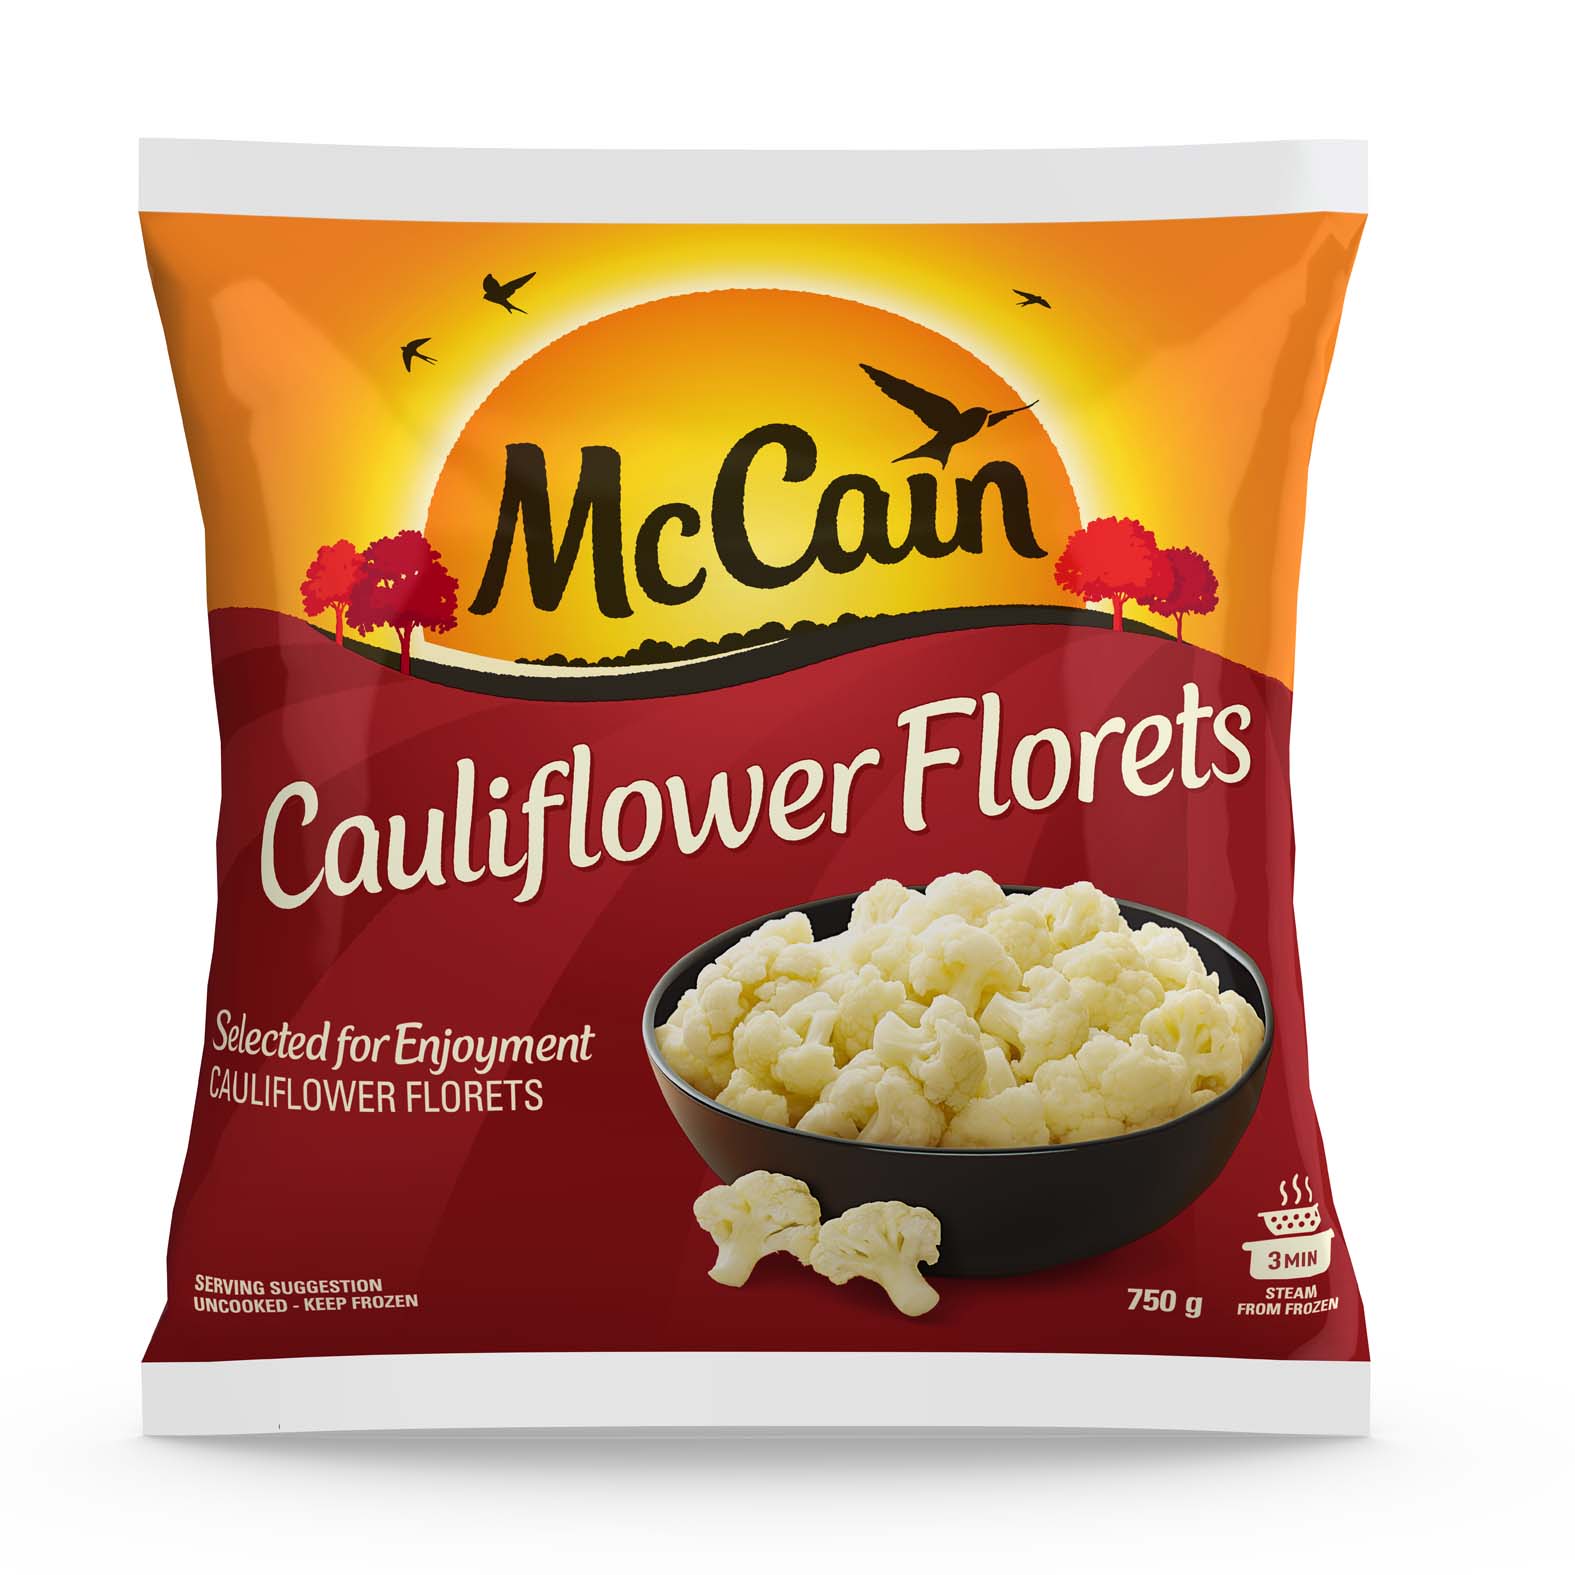 Cauliflower Florets 750g Pack Photo